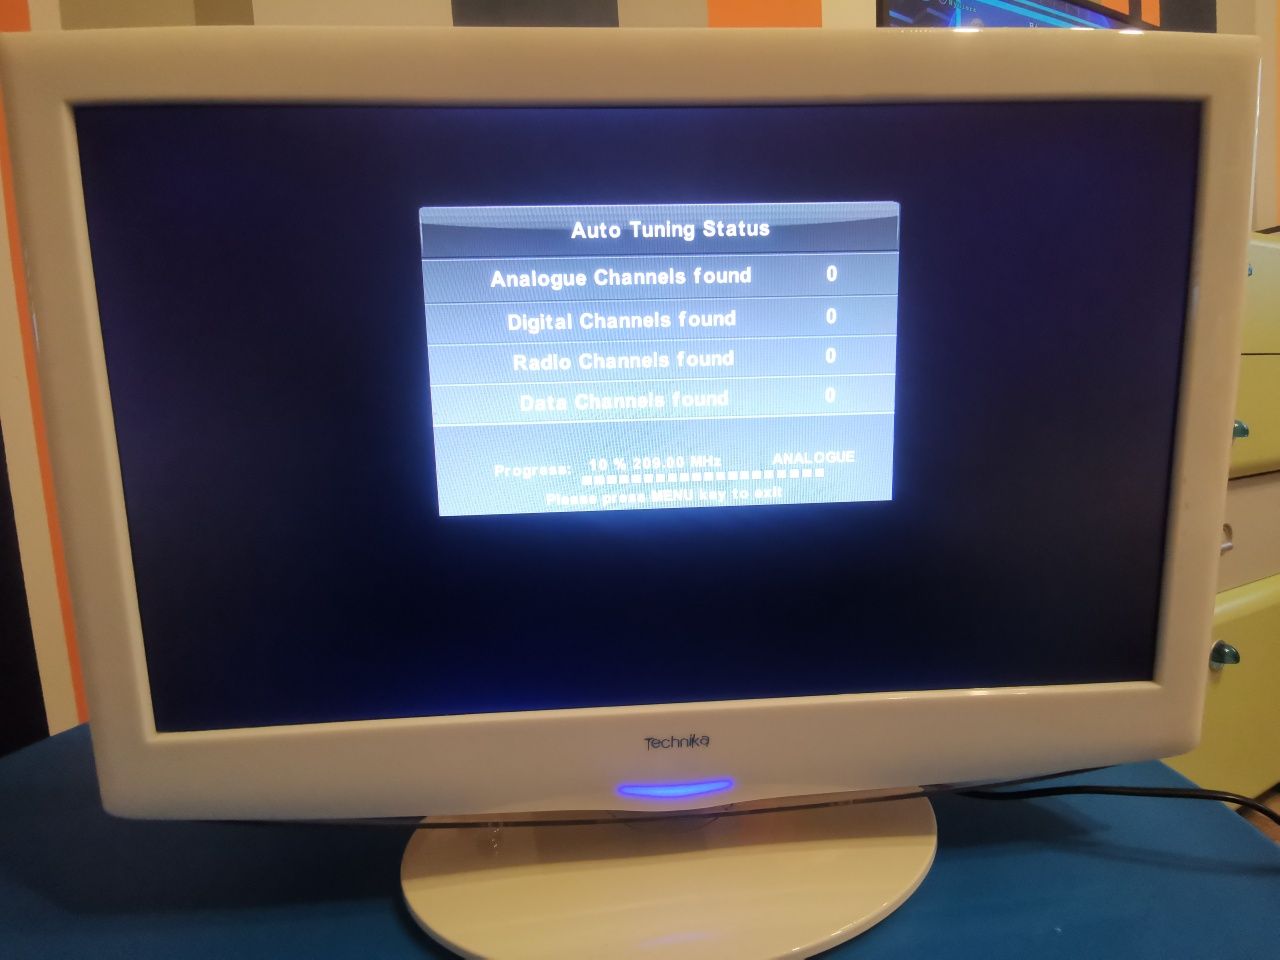 Technika telewizor 21.6 LCD wraz z dvd